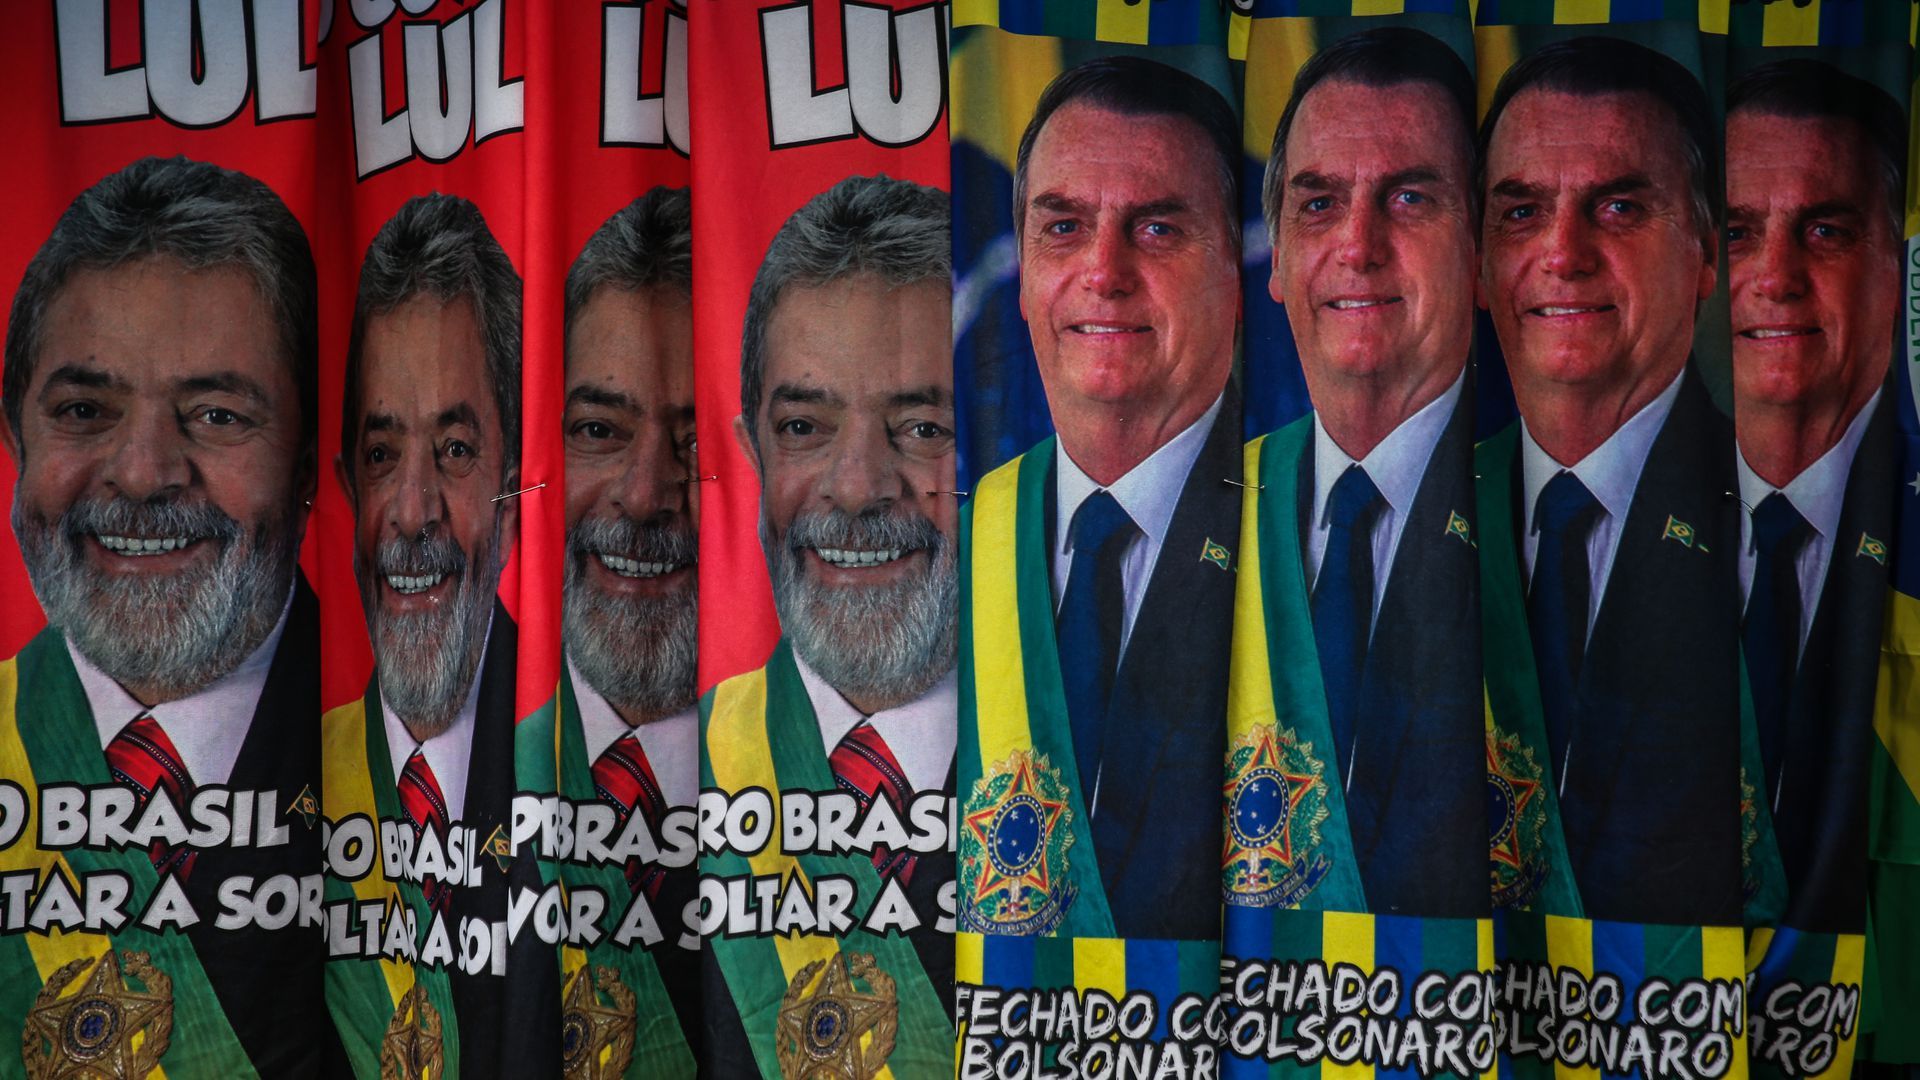 Towels with images of presidential candidates Luiz Inácio Lula da Silva and Jair Bolsonaro. Photo: Alexandre Schneider/Getty Images